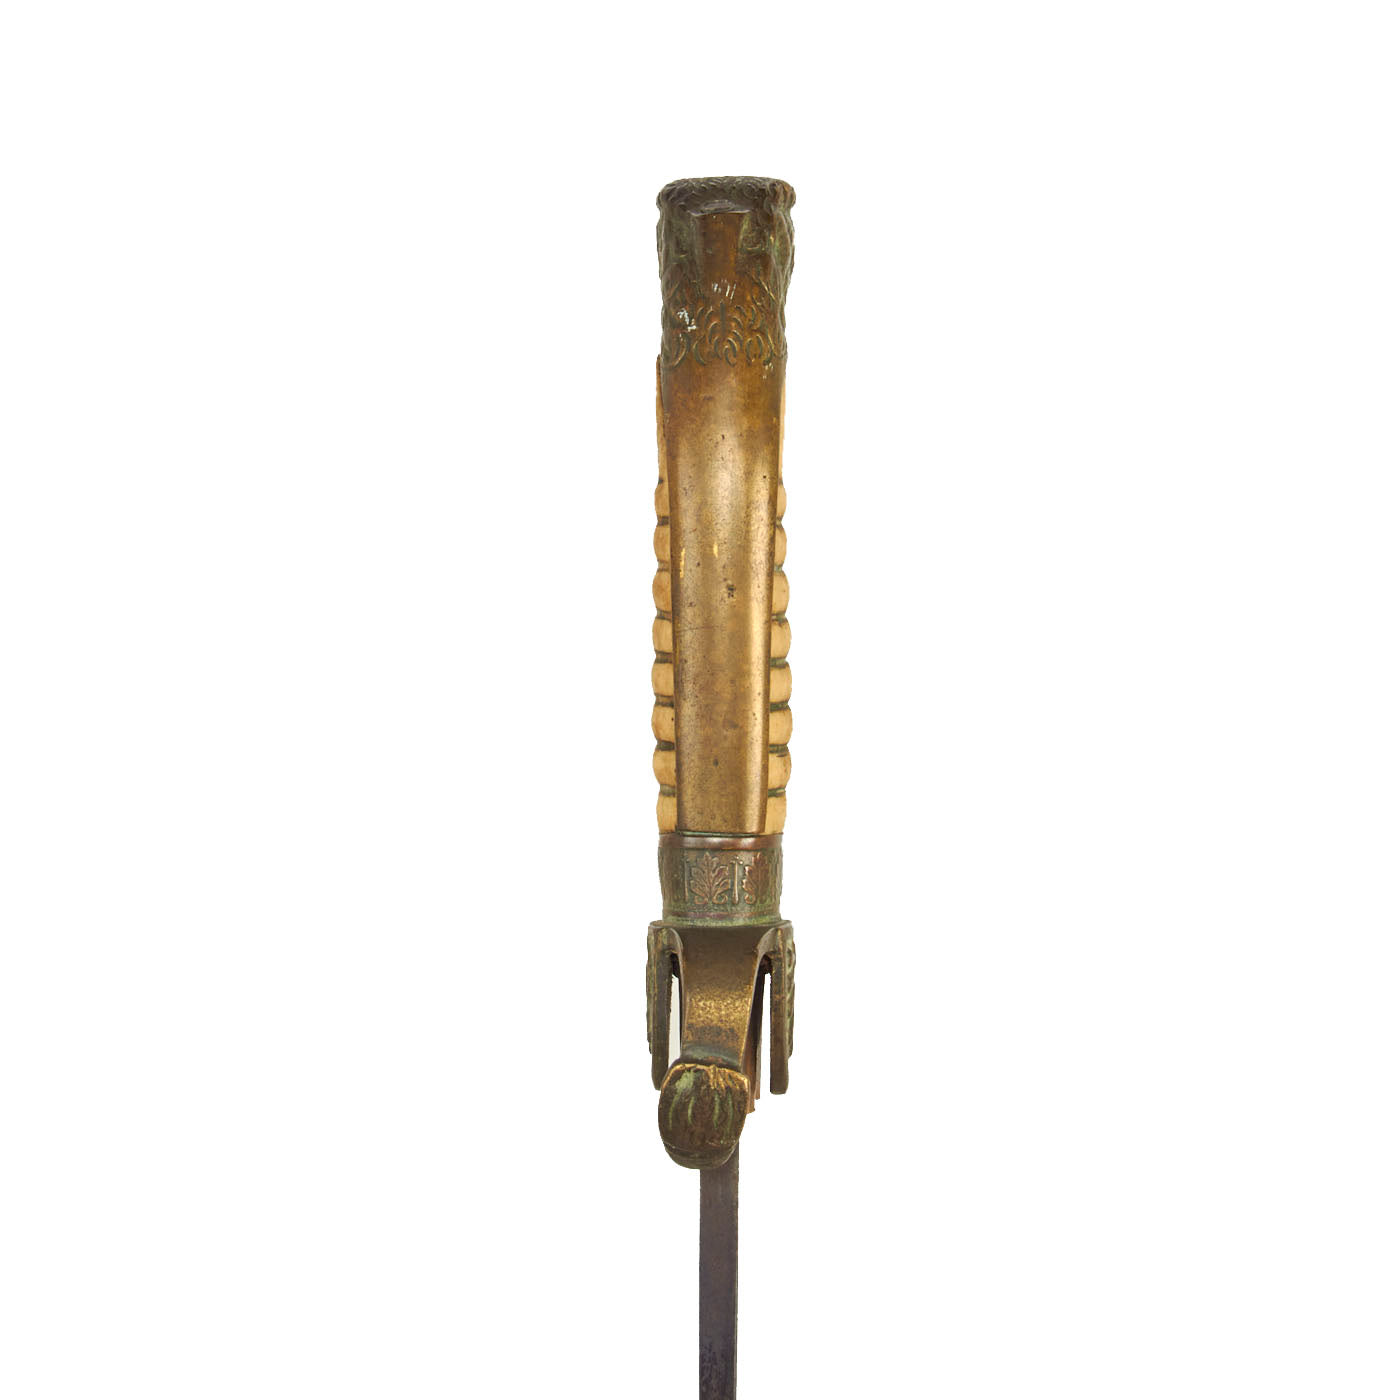 Antique prosthetic hook